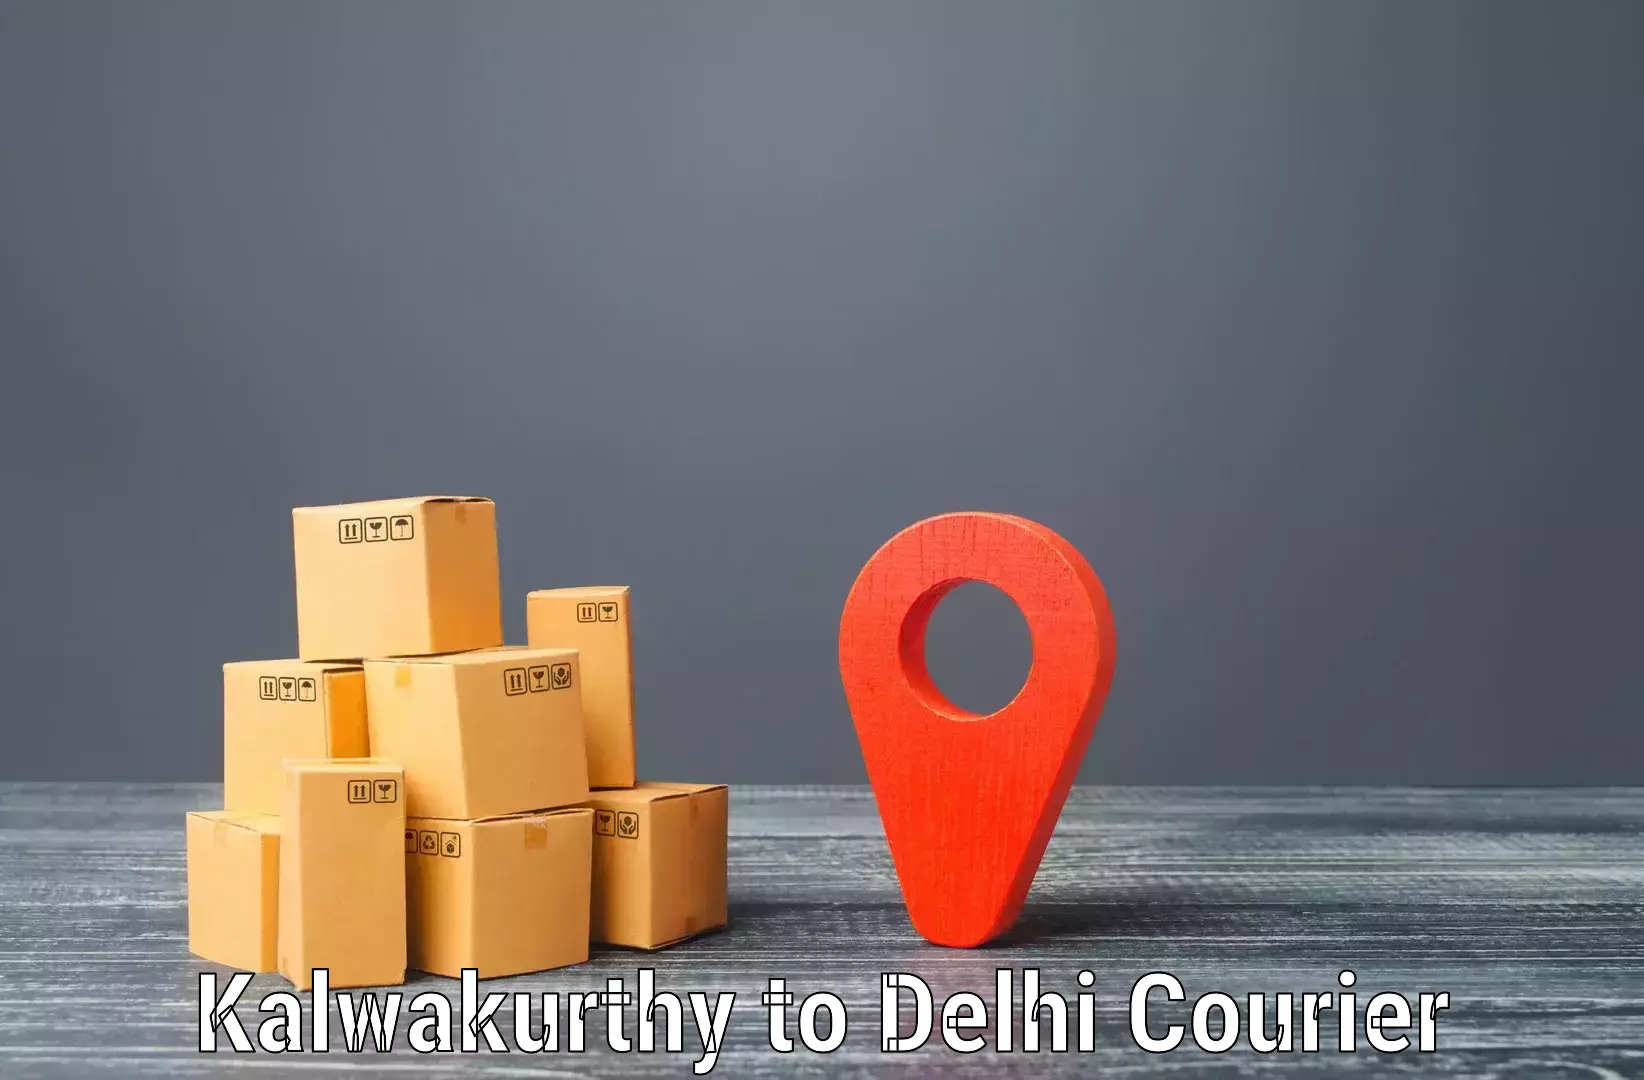 Courier service comparison Kalwakurthy to Kalkaji